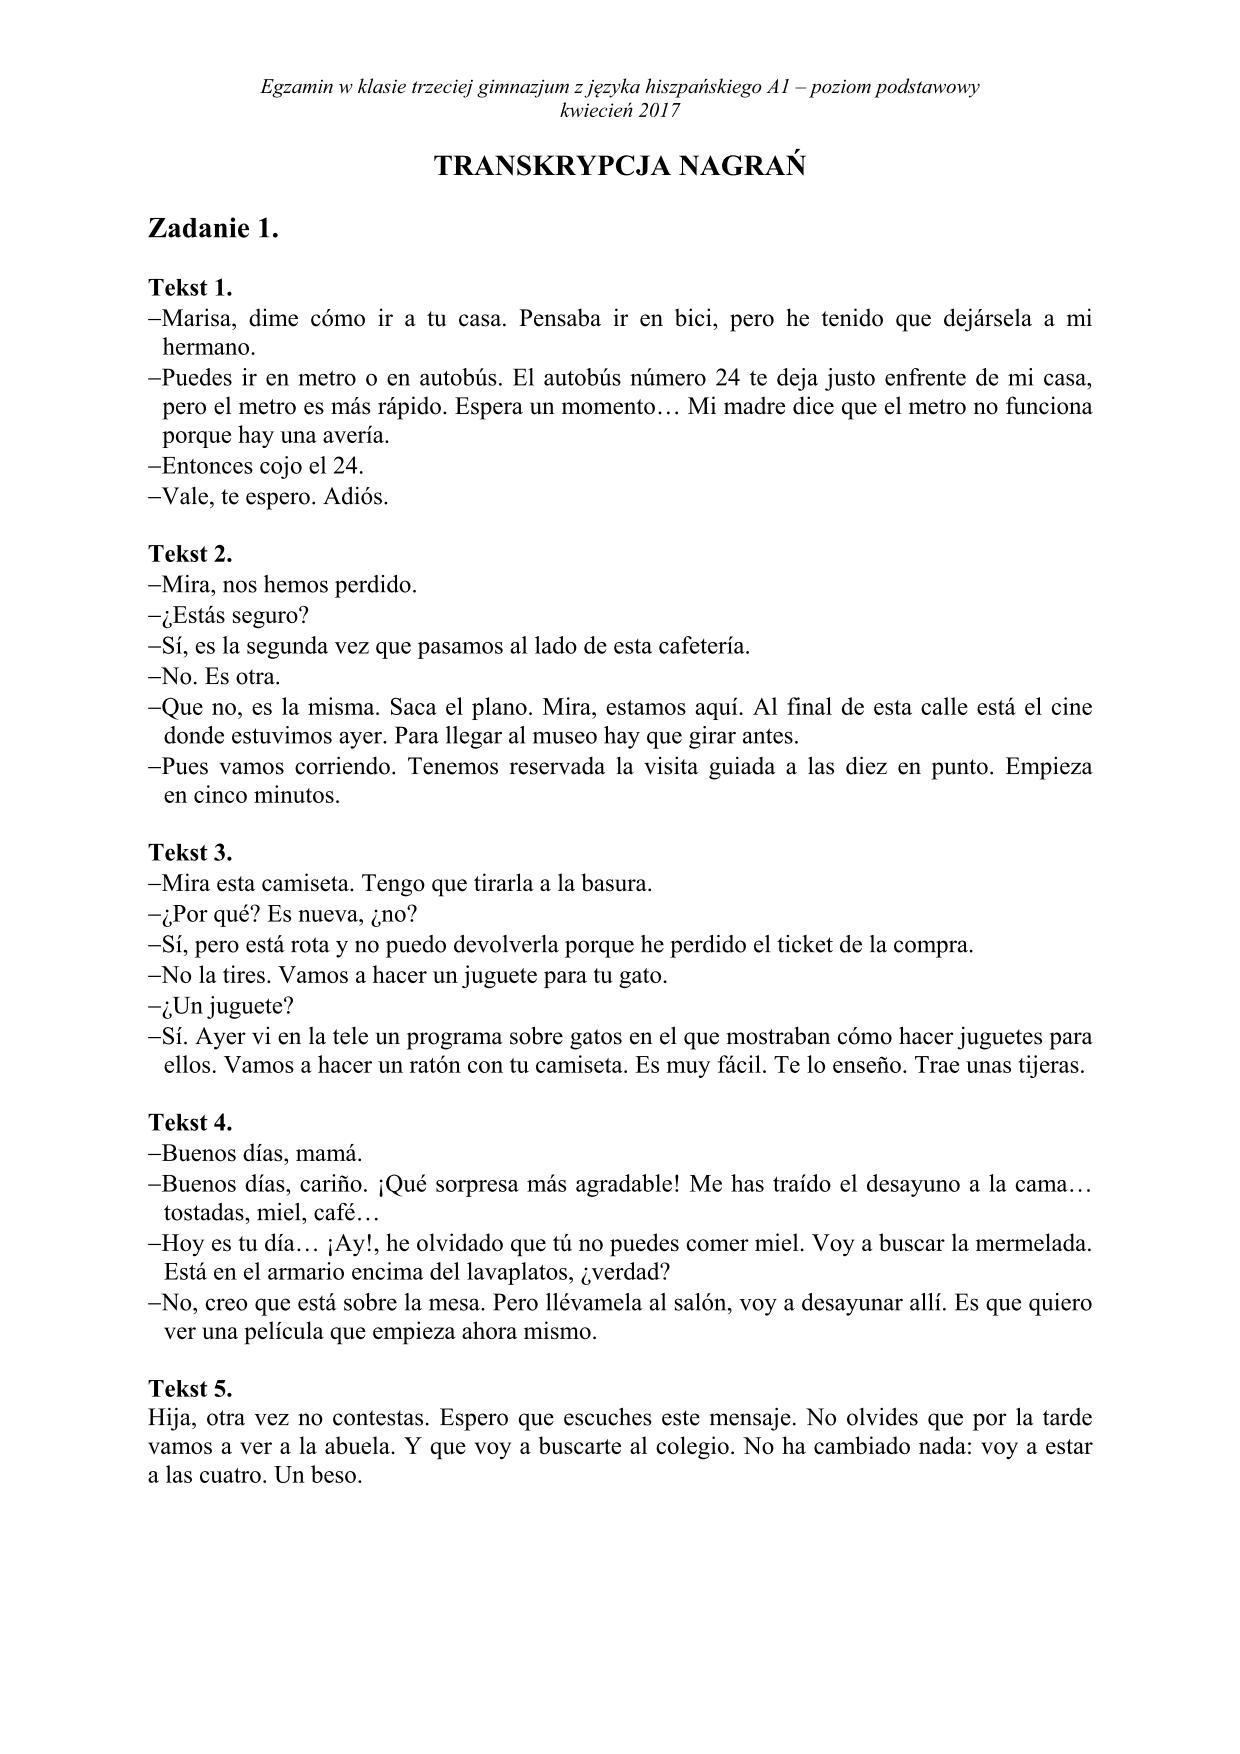 transkrypcja-hiszpanski-poziom-podstawowy-egzamin-gimnazjalny-2017 - 1